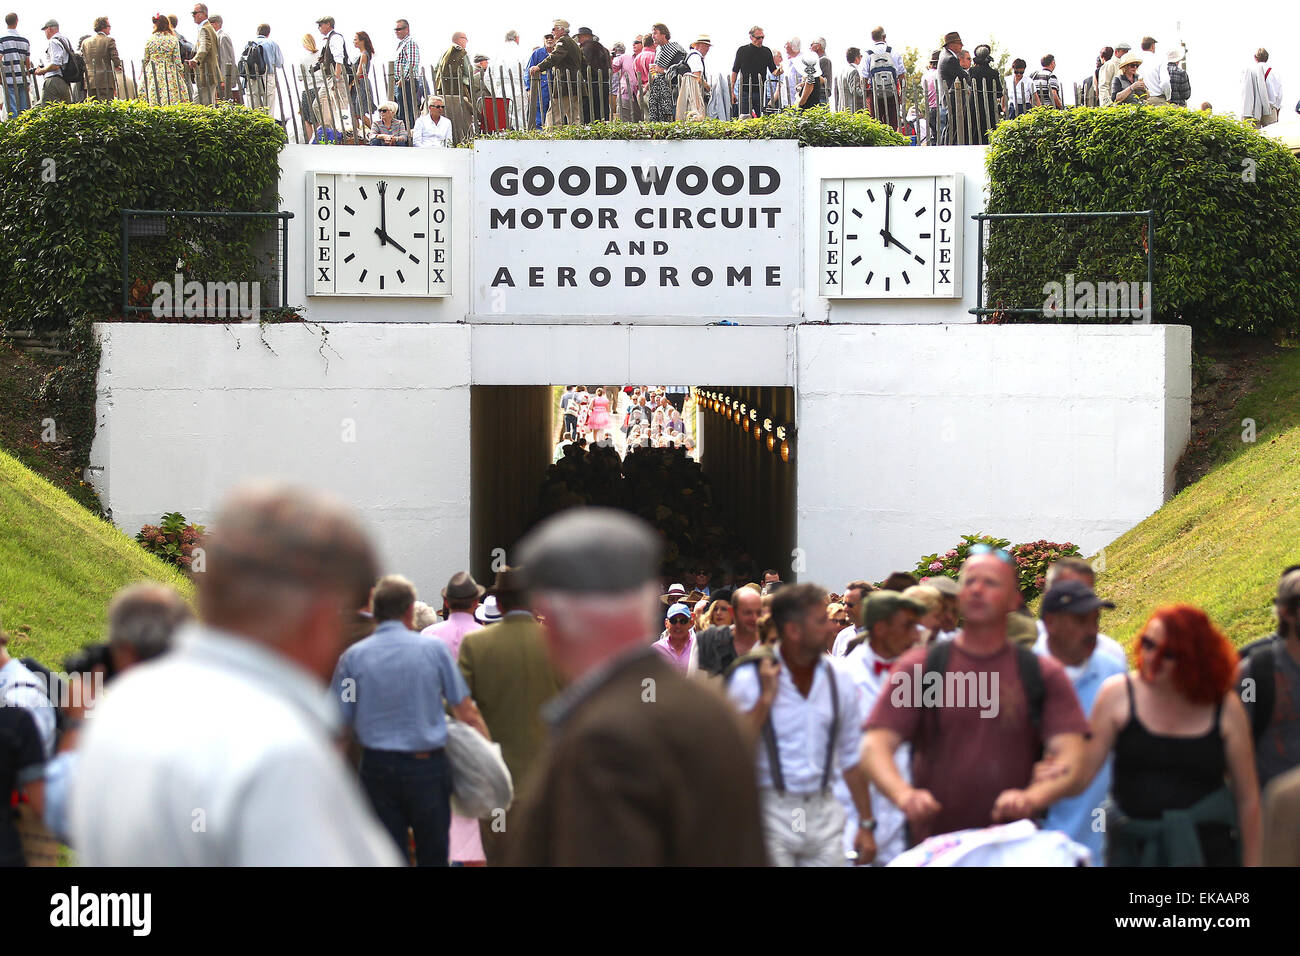 Goodwood Motor Schaltung während der Revival-festival Stockfoto